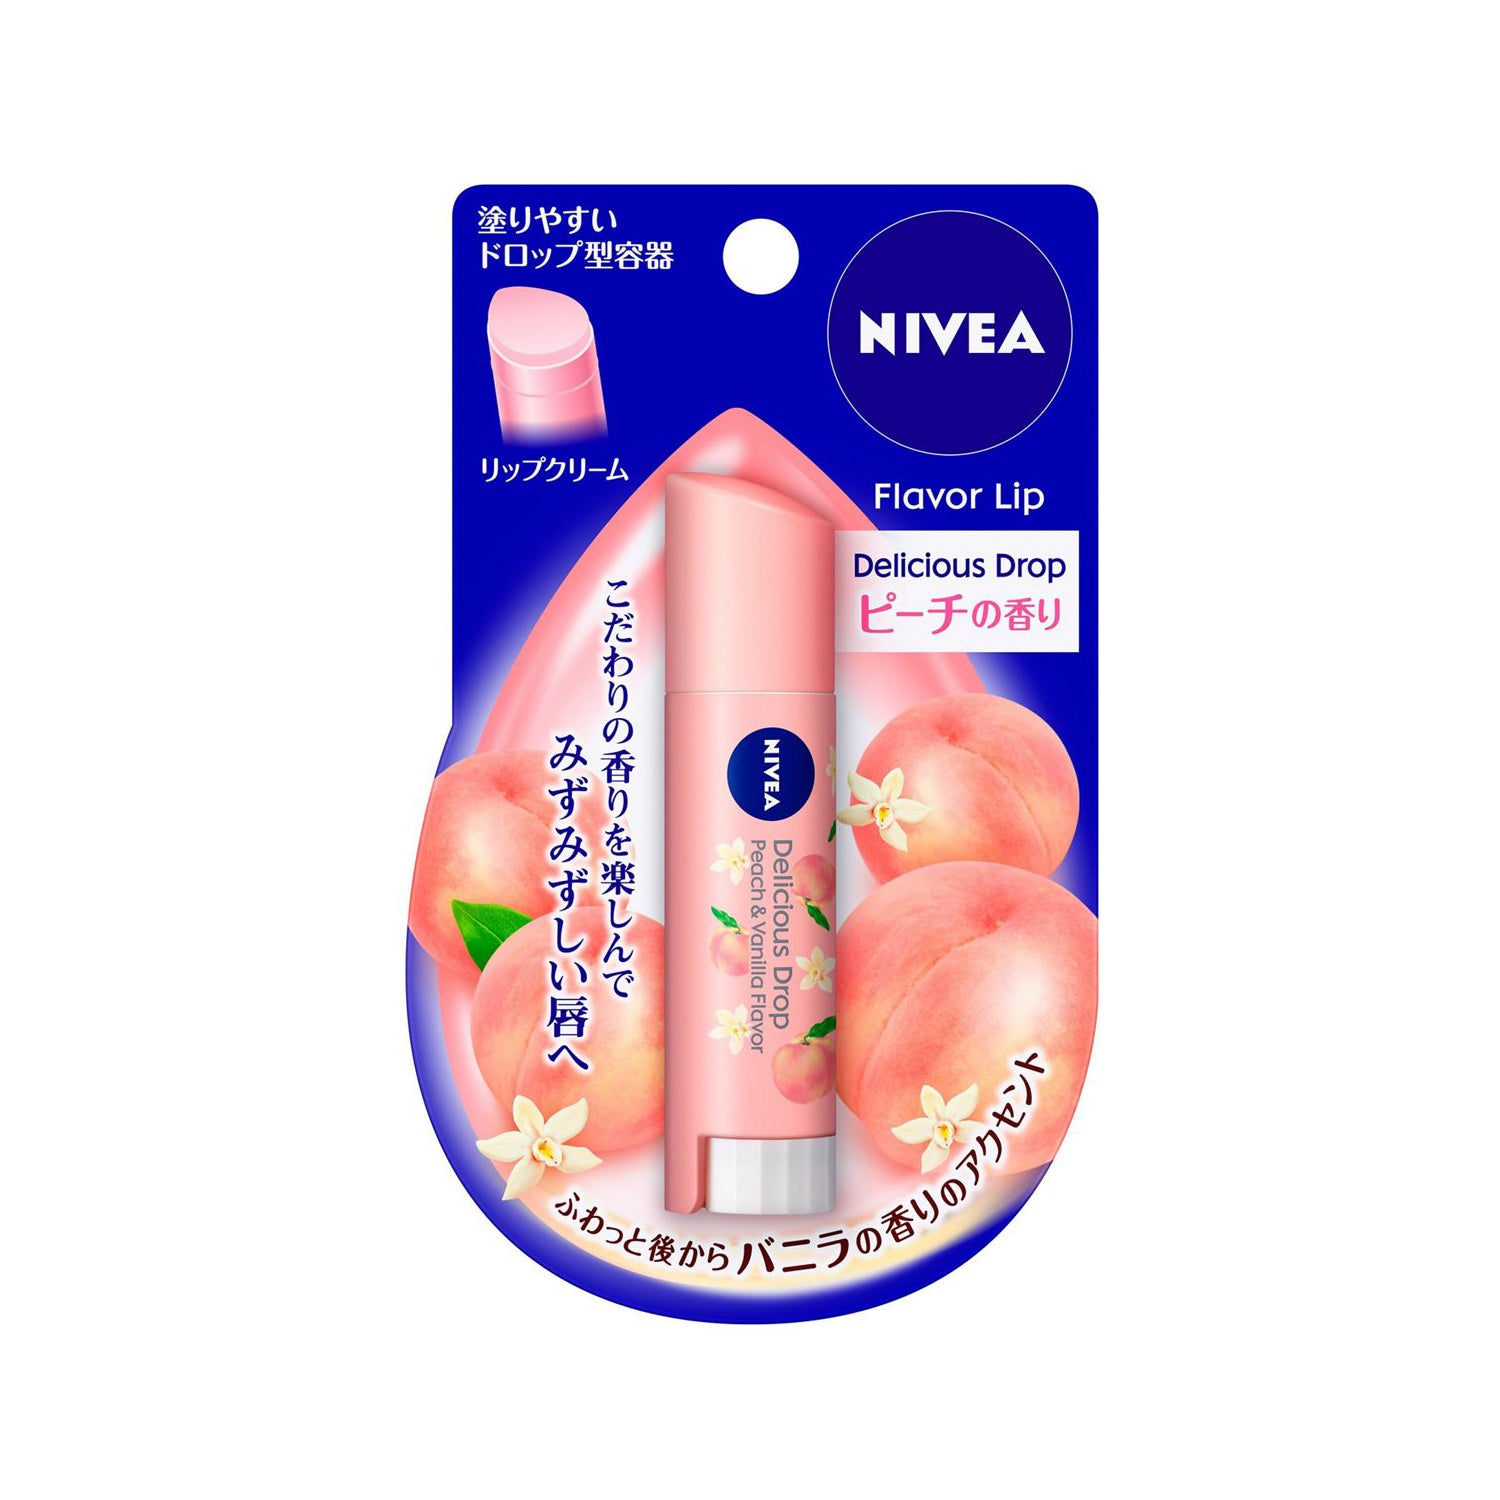 Nivea Delicious Drop Flavored Lip Balm - Peach Beauty Nivea Japan   